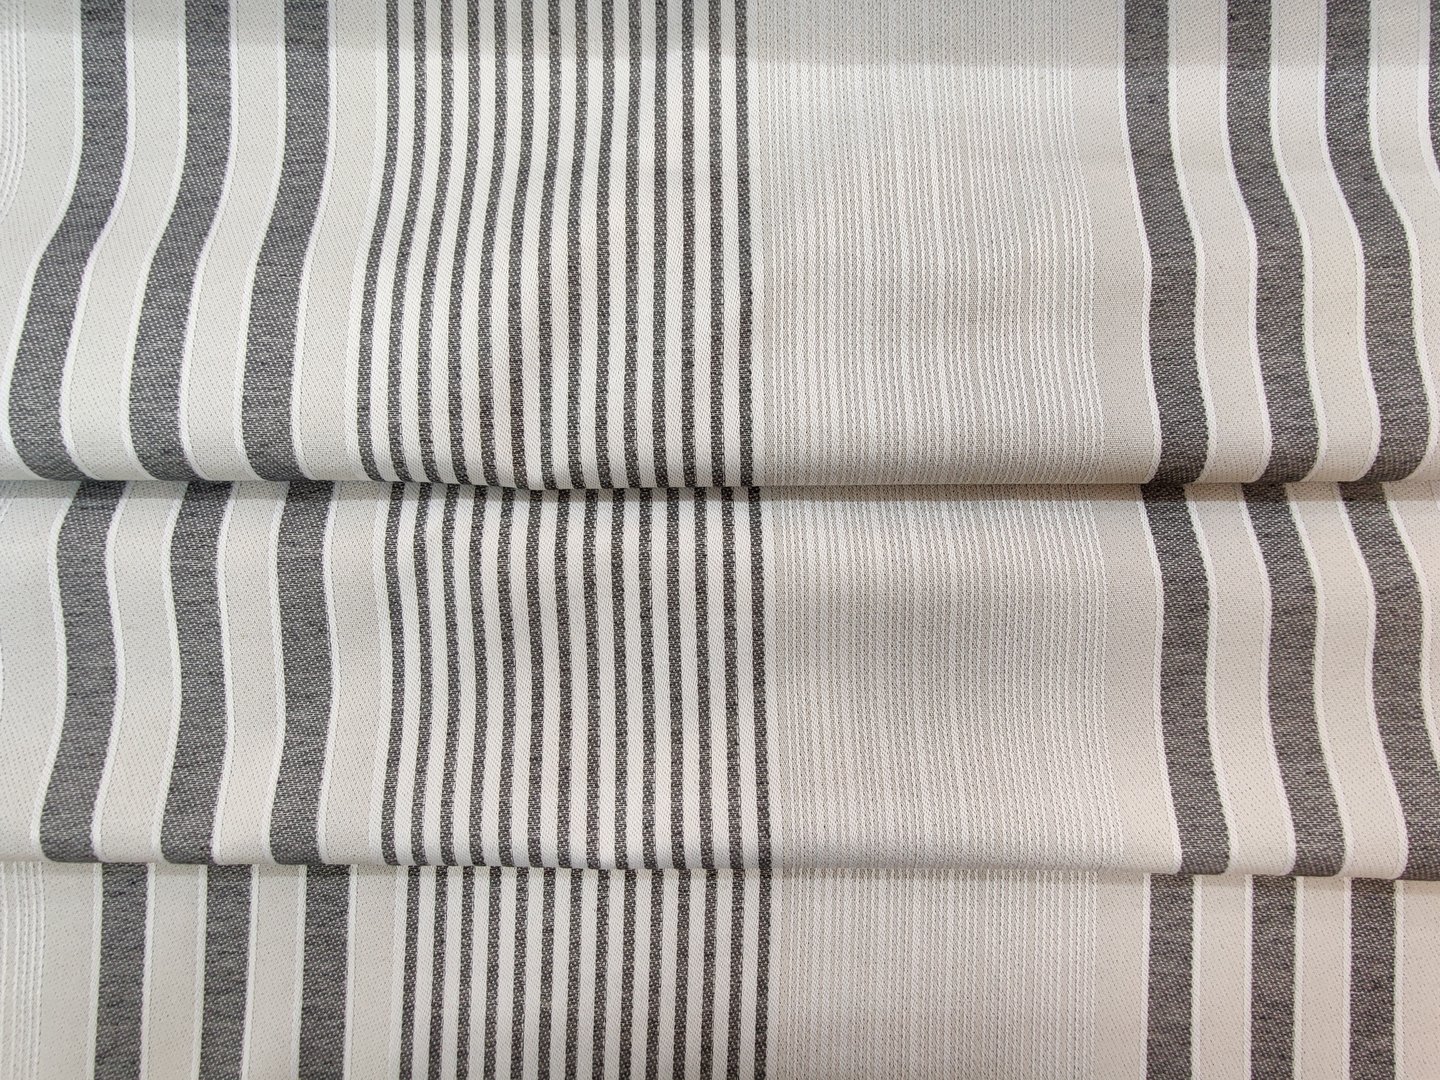 Anona gray striped fabric